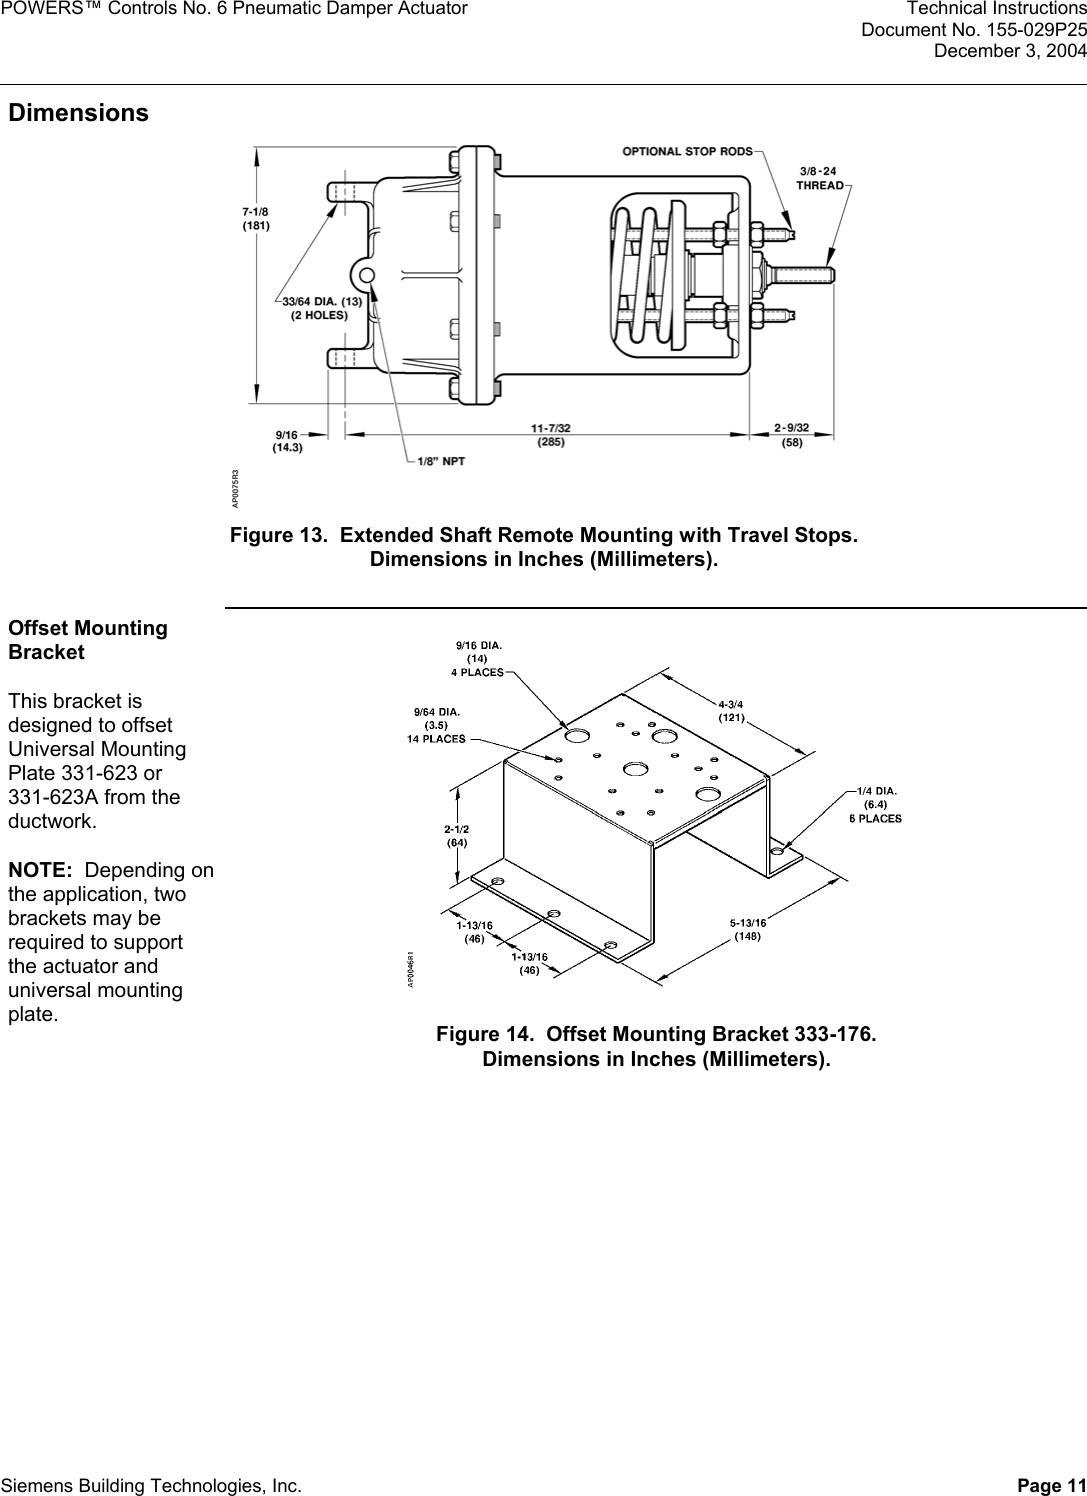 Page 11 of 12 - Siemens Siemens-331-2856-332-2856-Ap-331-3-Users-Manual- Powers Control - No. 6 Pneumatic Damper Actuator  Siemens-331-2856-332-2856-ap-331-3-users-manual